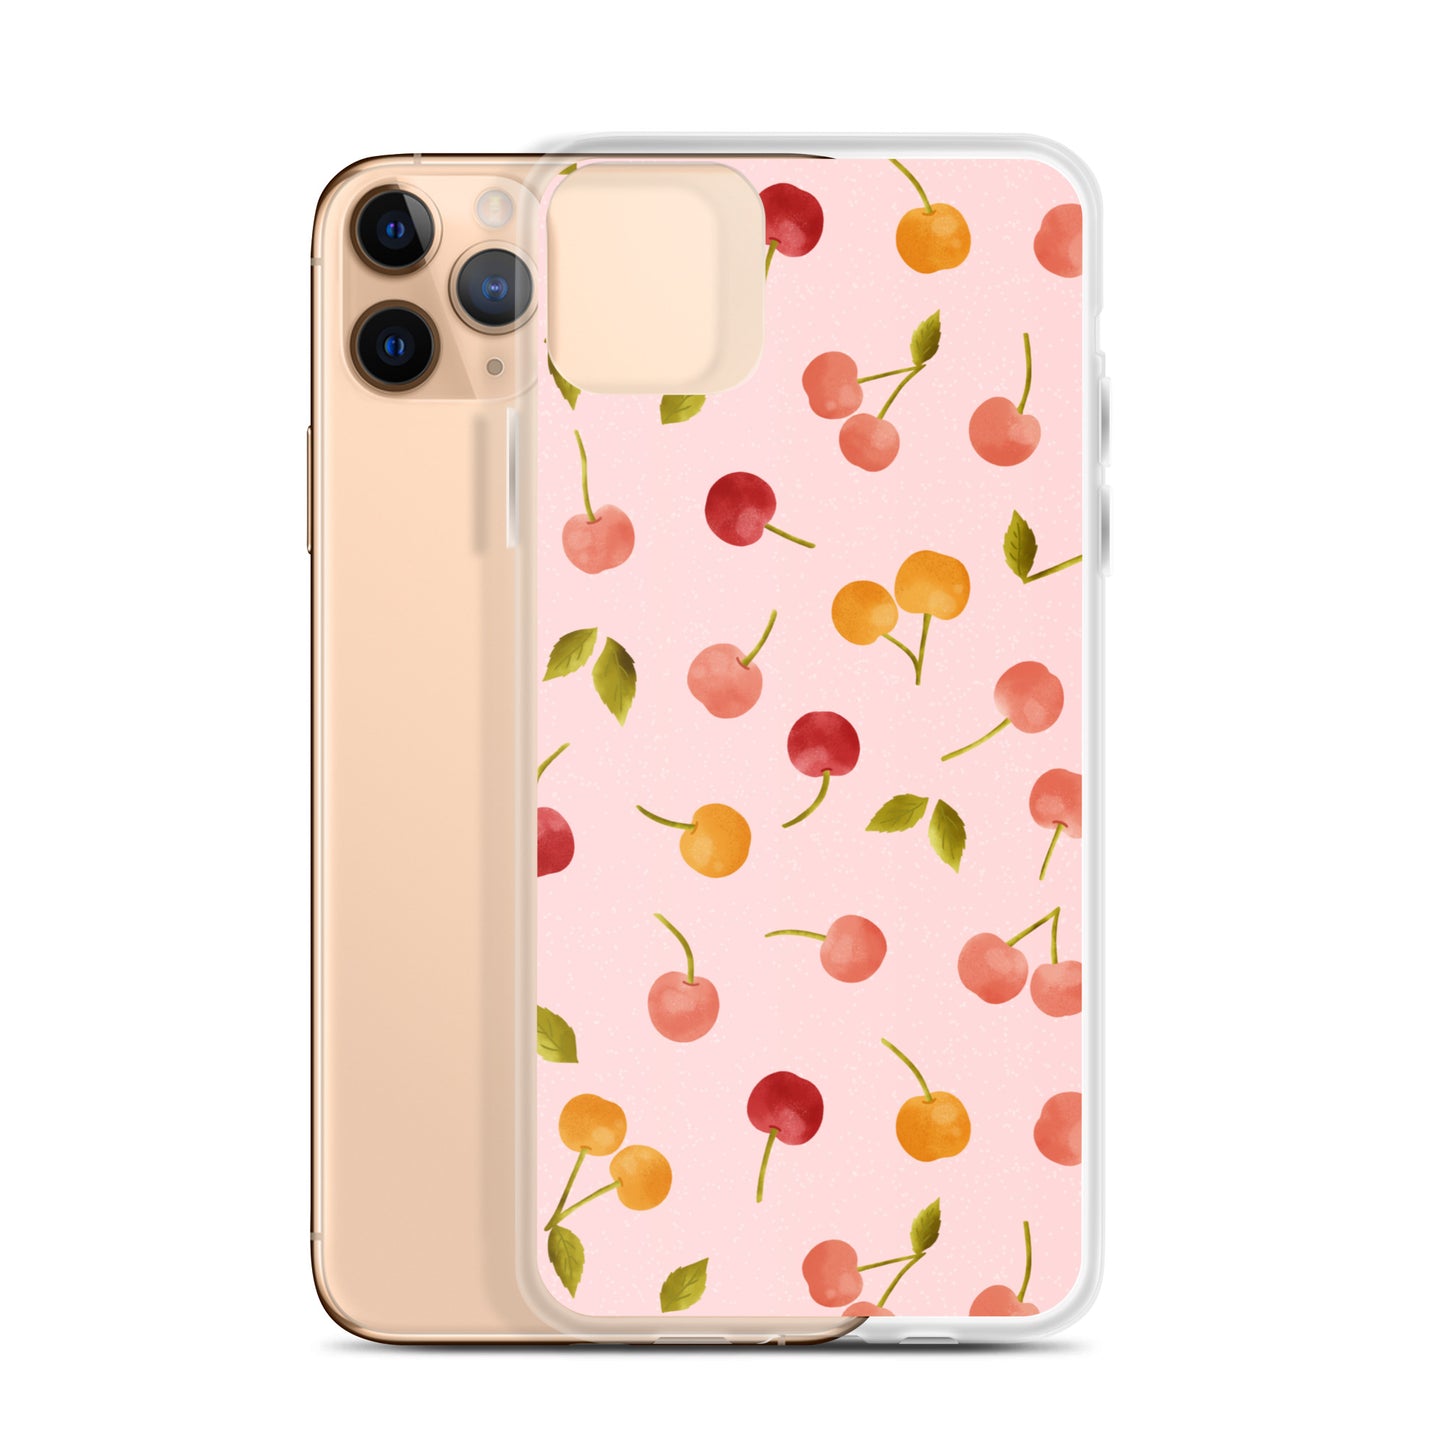 Cherries iPhone case